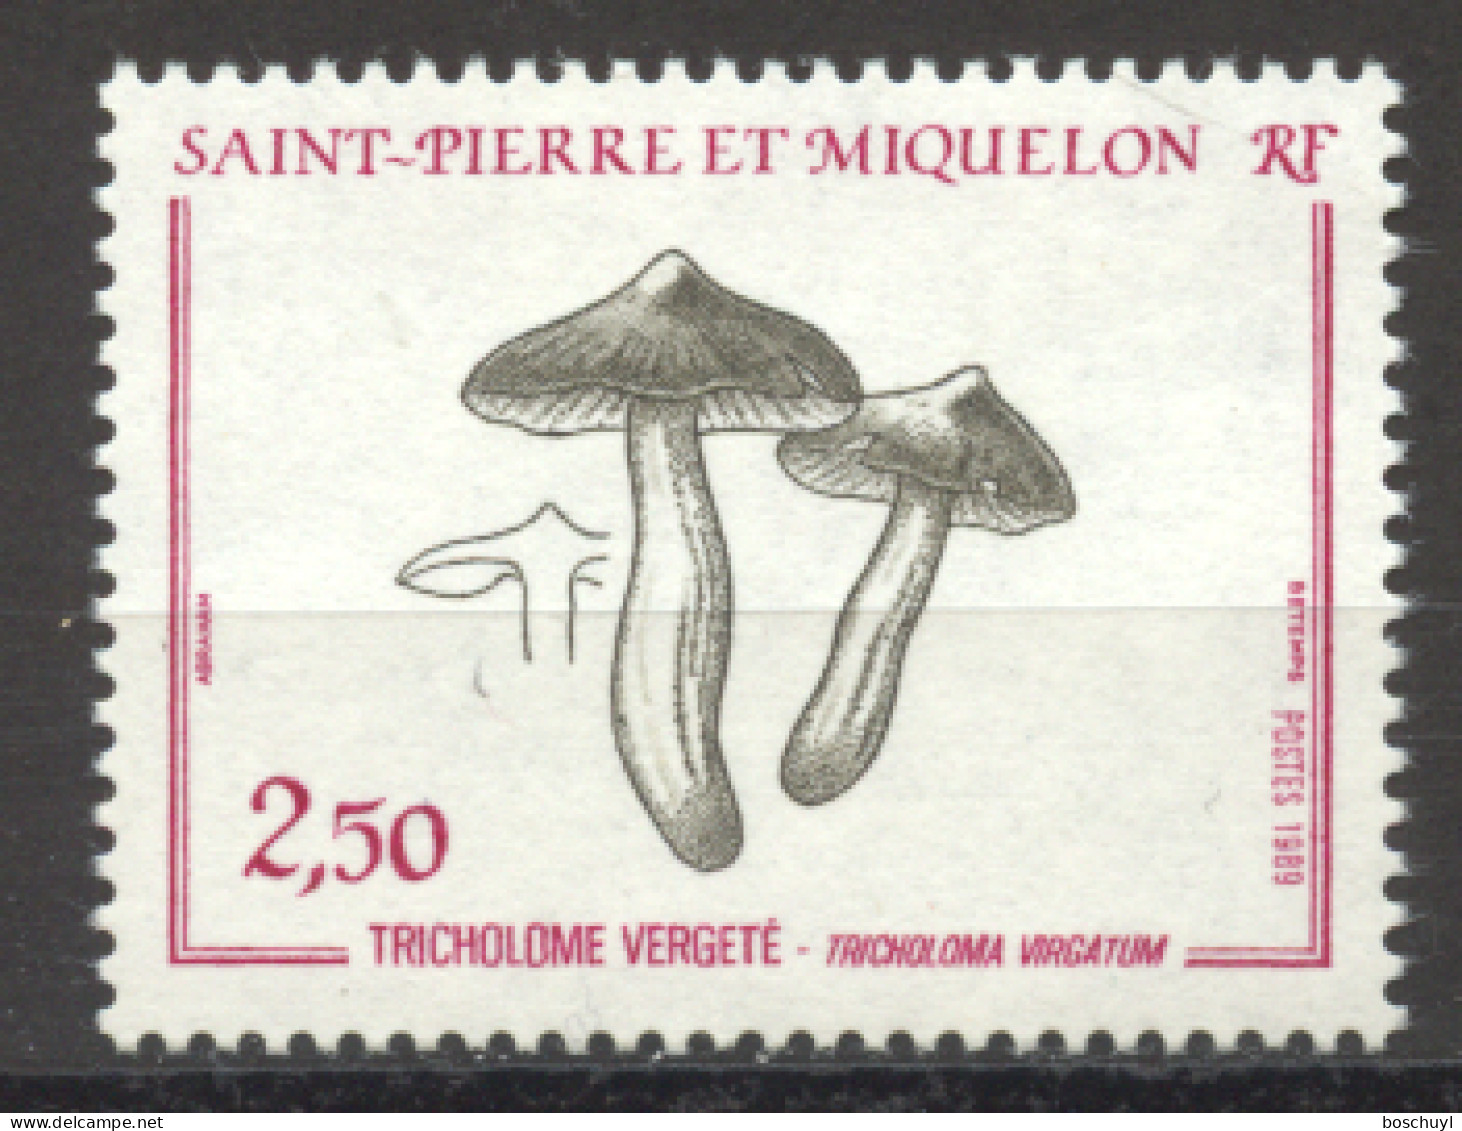 St Pierre And Miquelon, 1989, Mushroom, MNH, Michel 569 - Unused Stamps